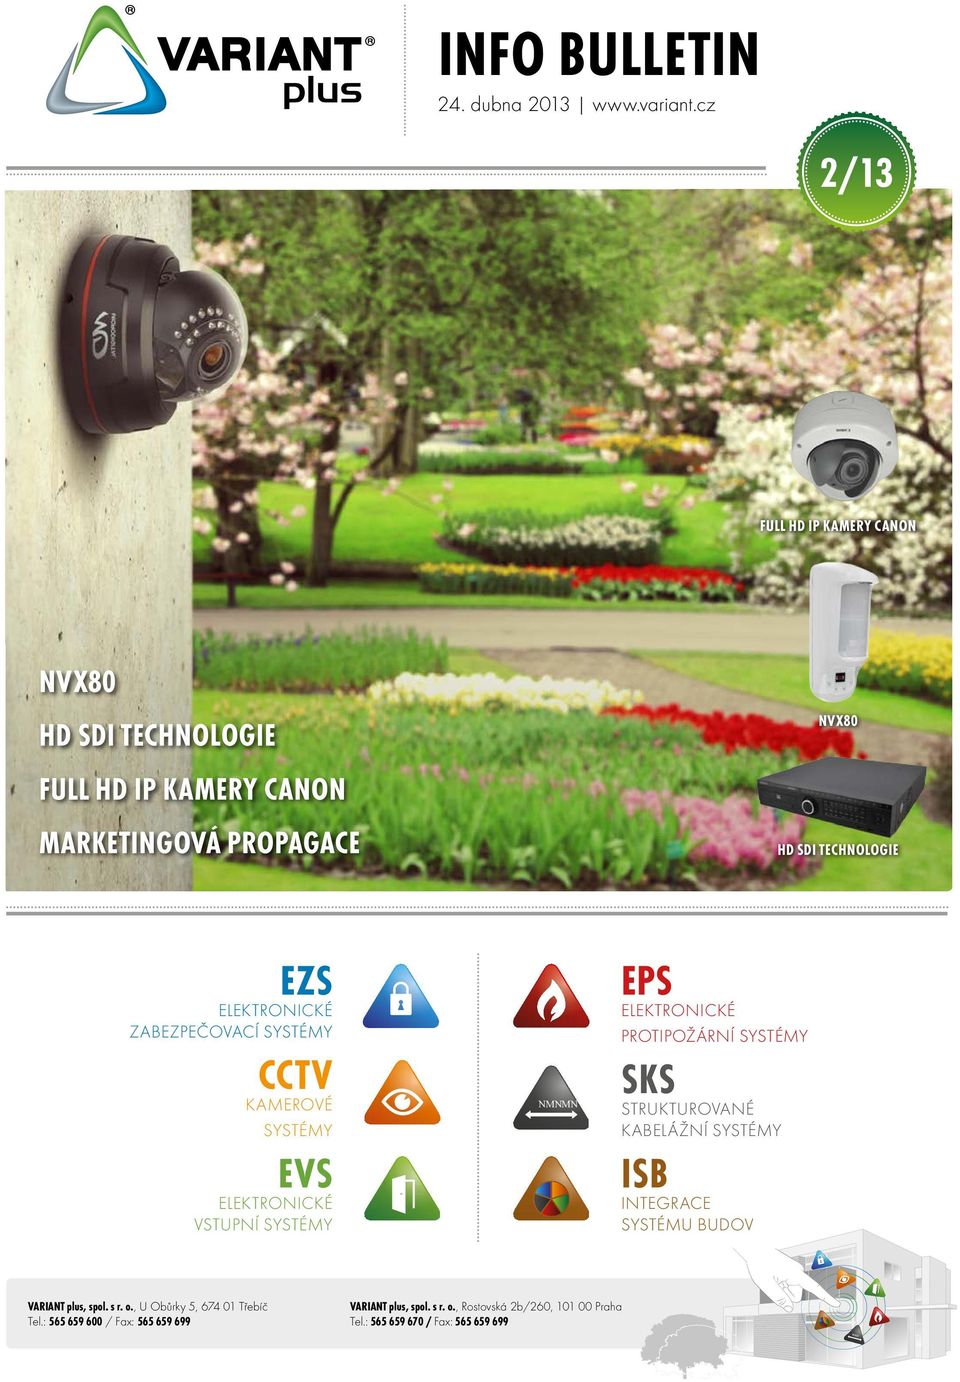 Elektronické zabezpečovací systémy CCTV Kamerové systémy EVS Elektronické vstupní systémy NMNMN EPS Elektronické protipožární systémy SKS